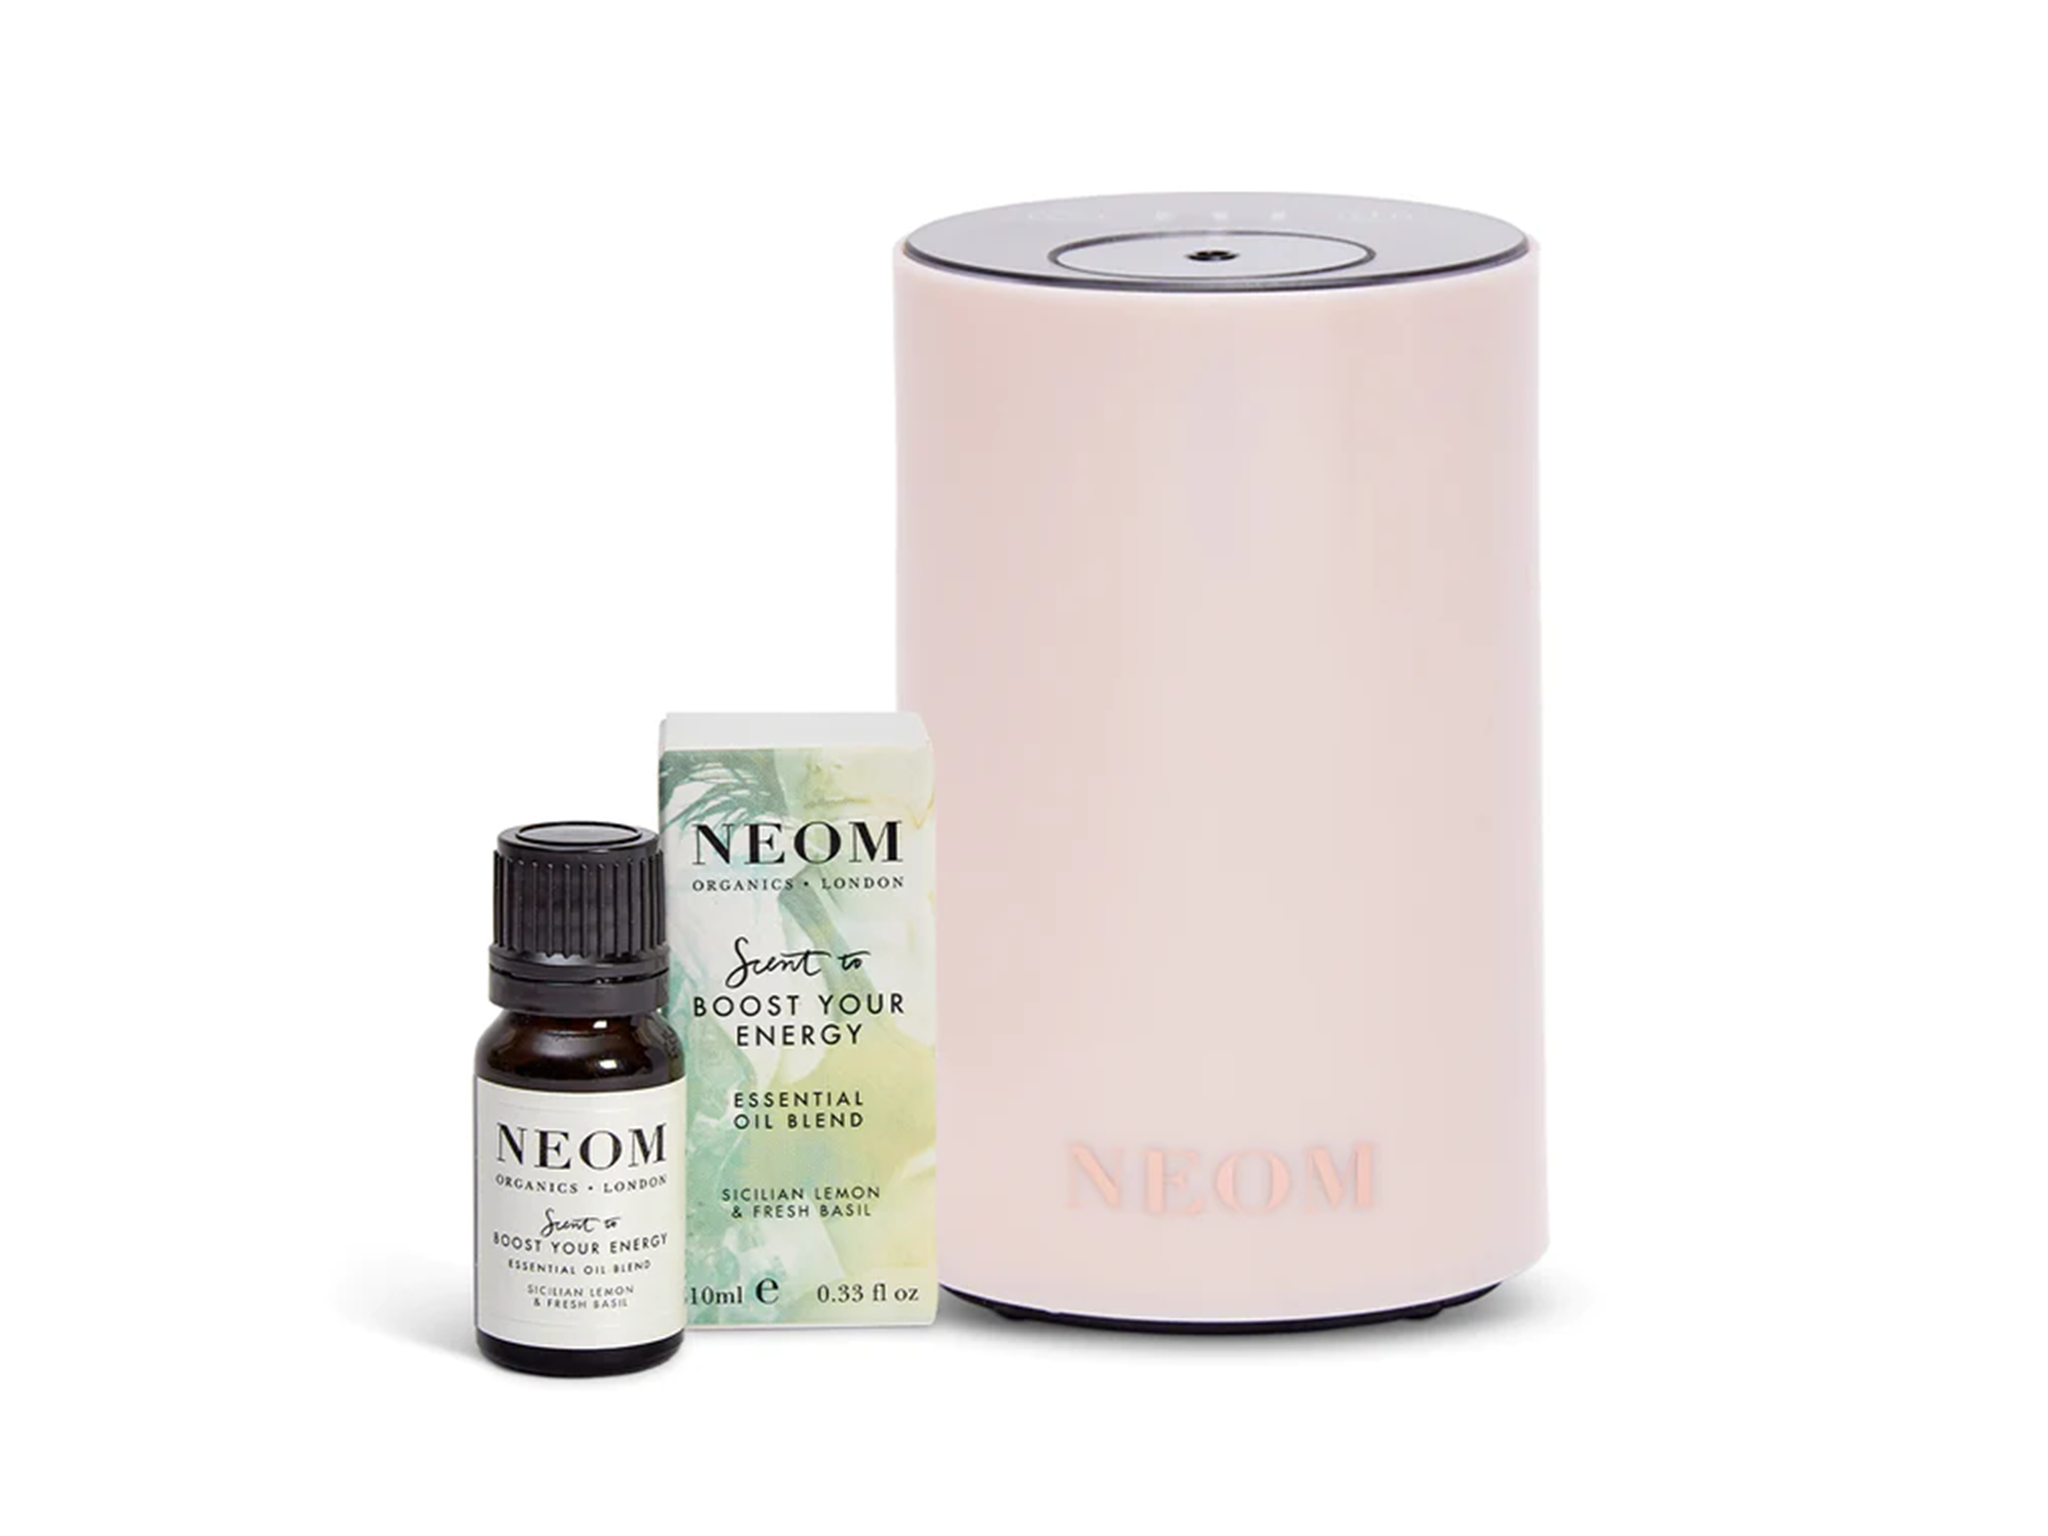 Neom wellbeing pod mini essential oil diffuser